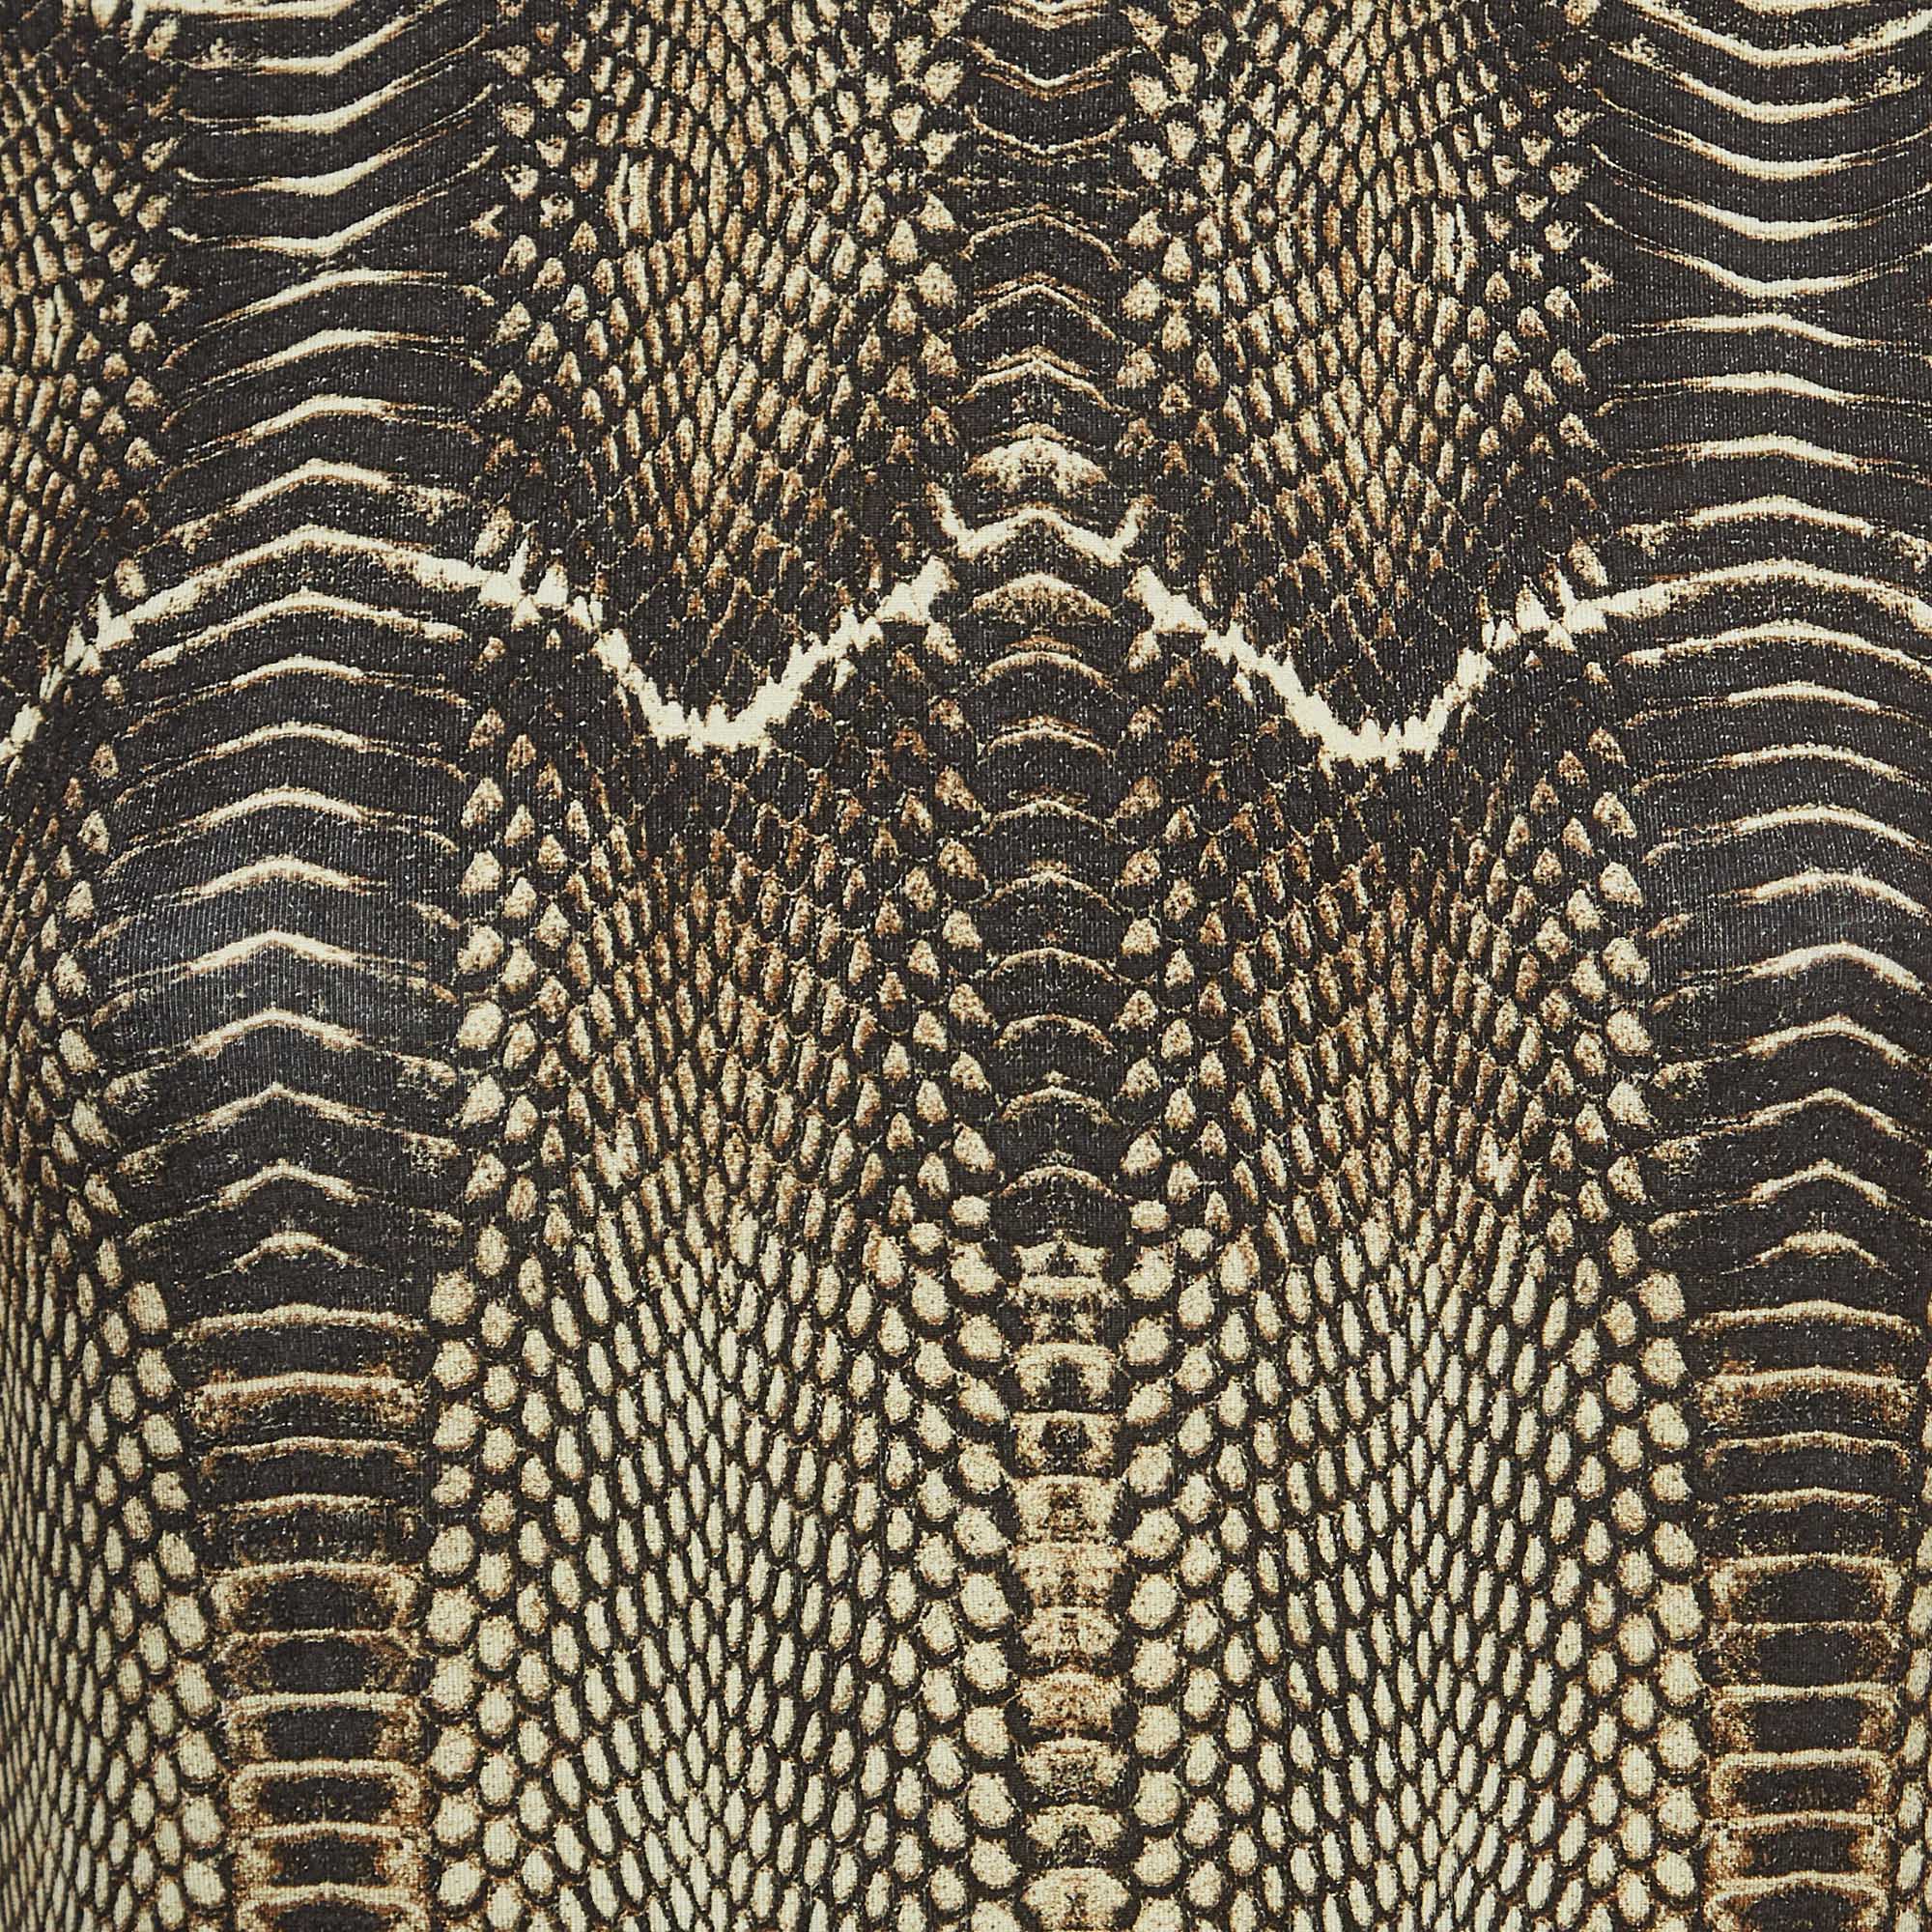 Roberto Cavalli Black Snakeskin Print Knit High Neck Top M